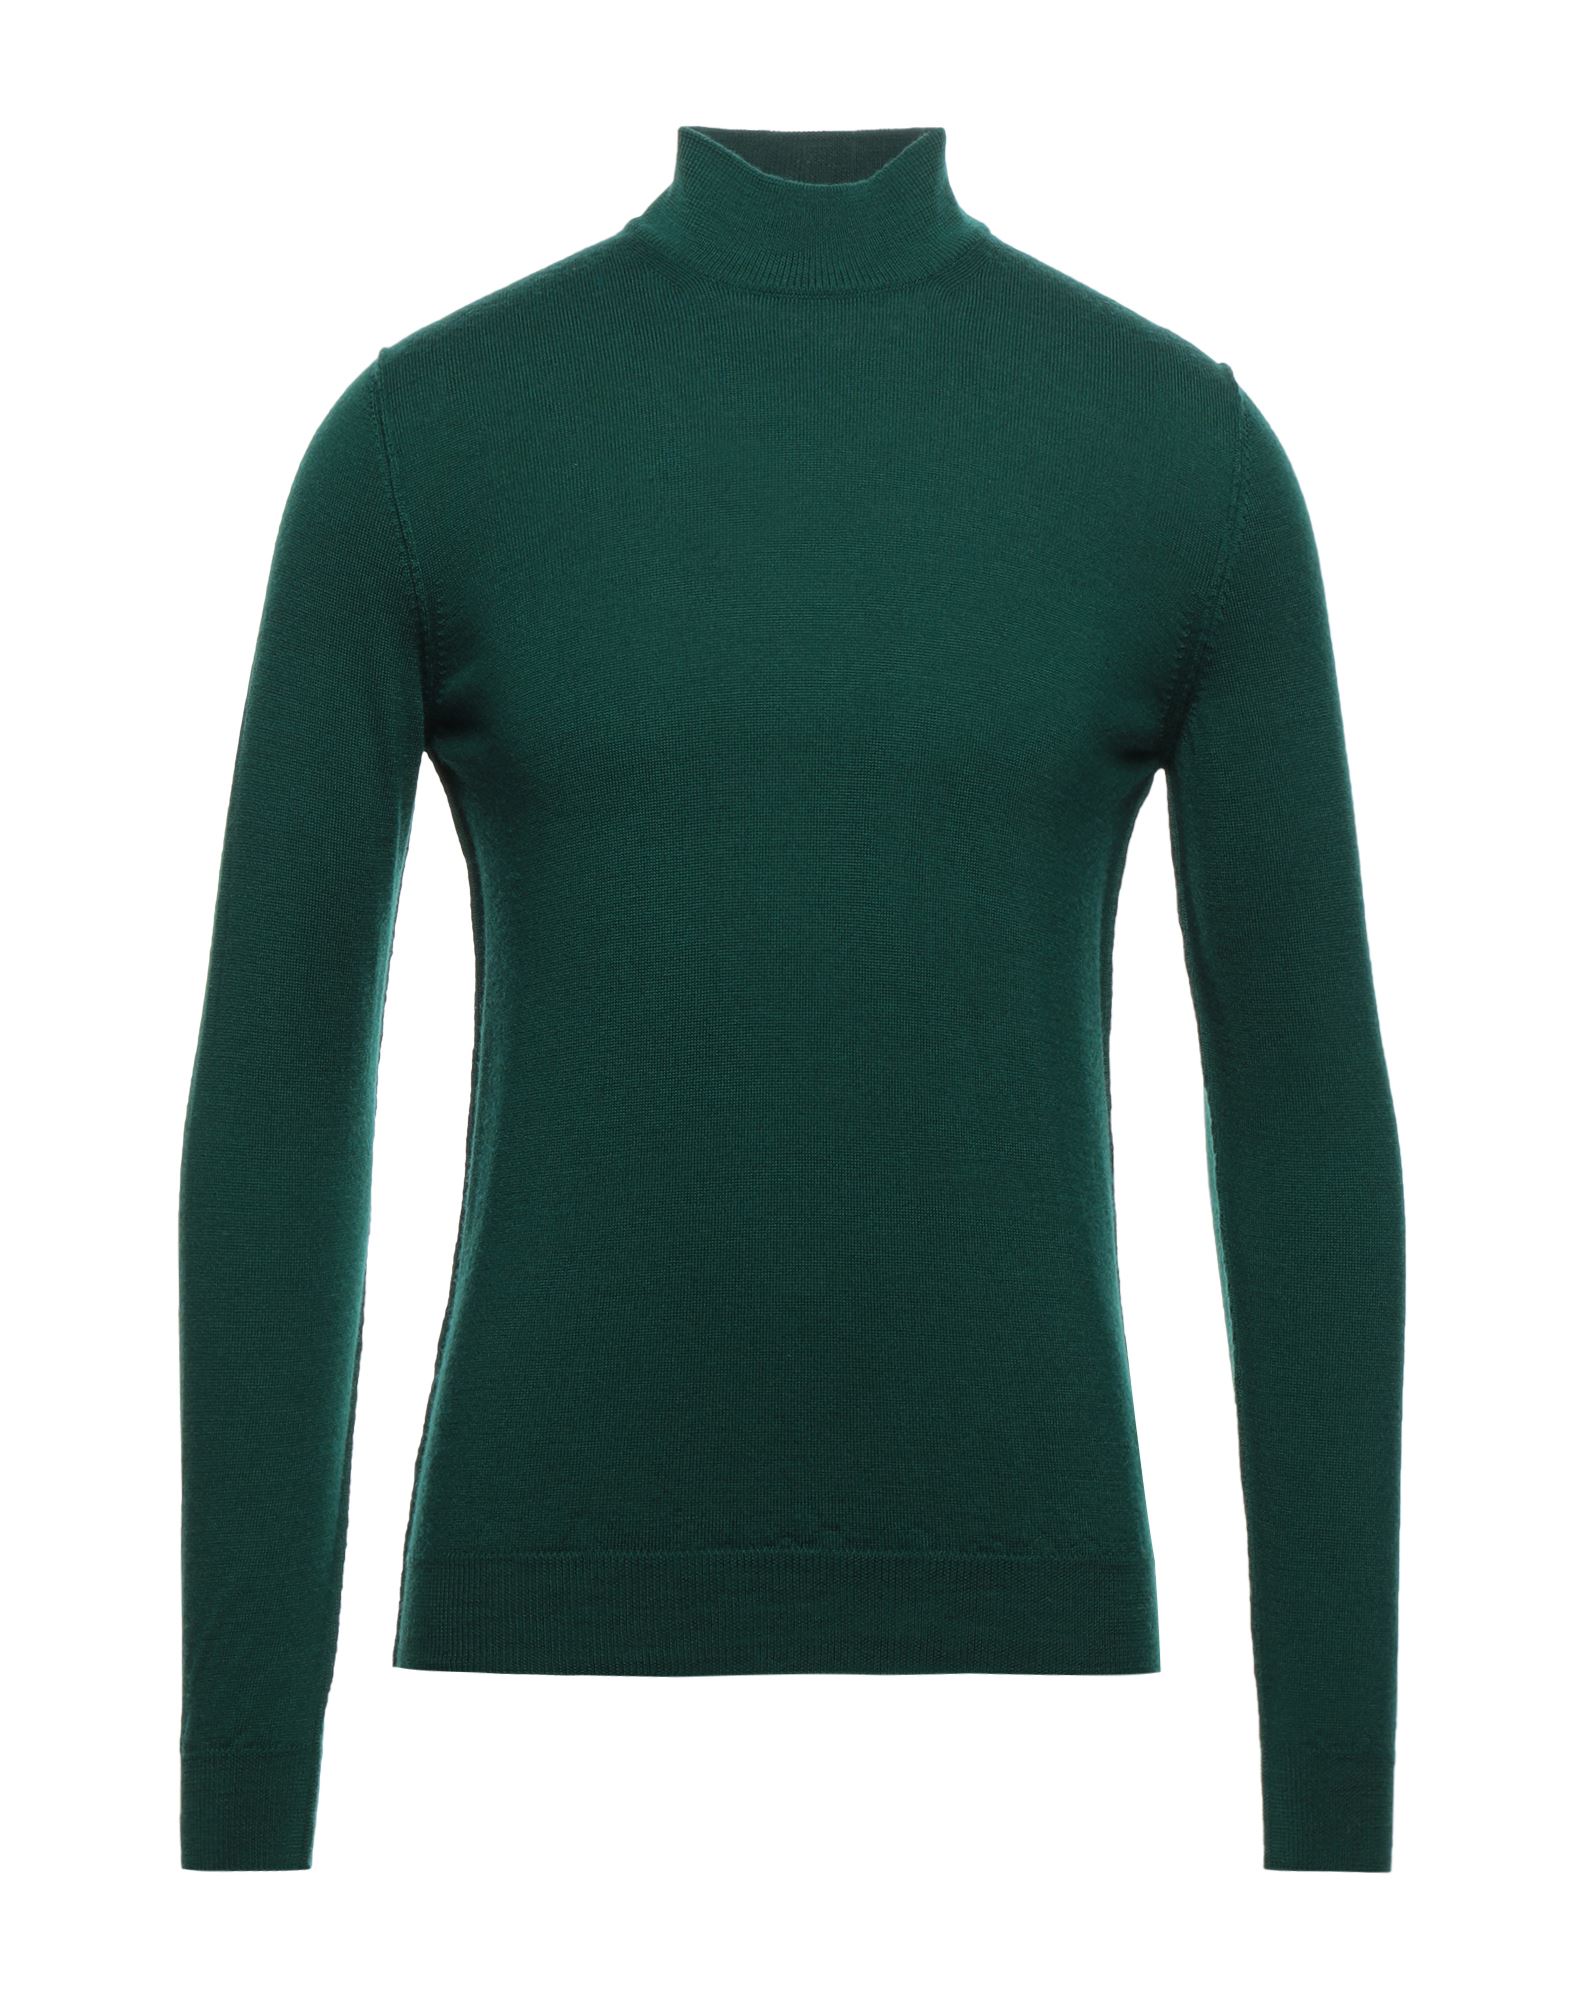 Shop Tsd12 Man Turtleneck Emerald Green Size 3xl Merino Wool, Acrylic